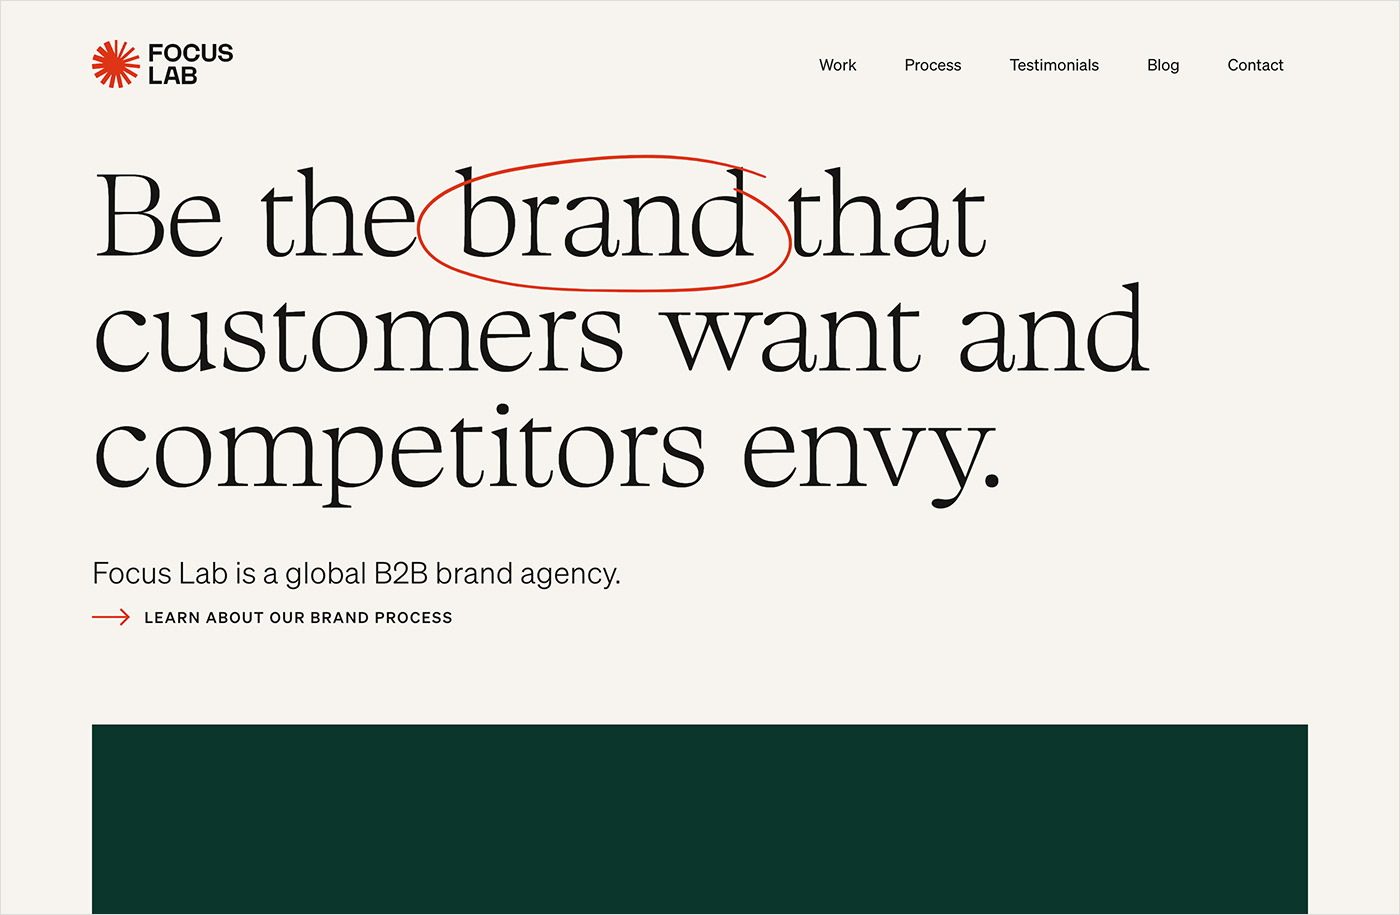 Building Brands That Lead and Inspireウェブサイトの画面キャプチャ画像